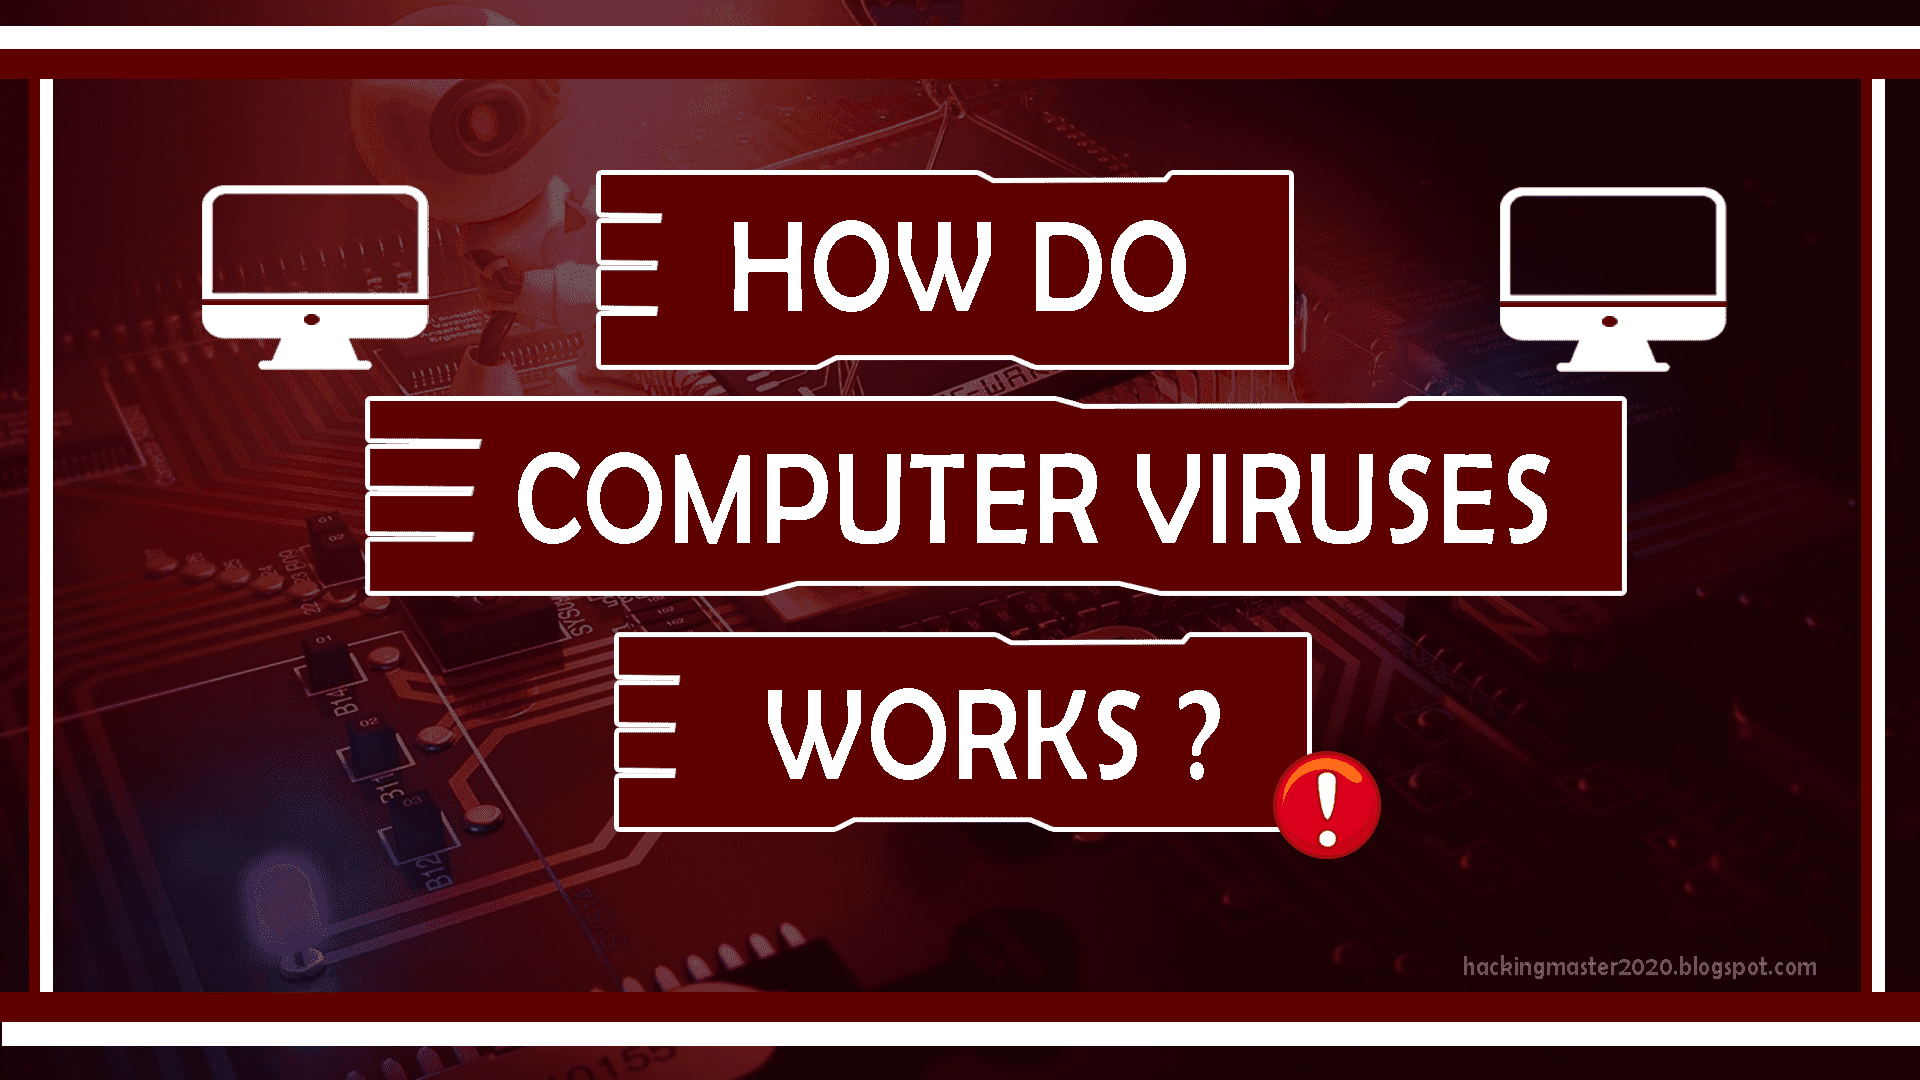 how do computer viruses work